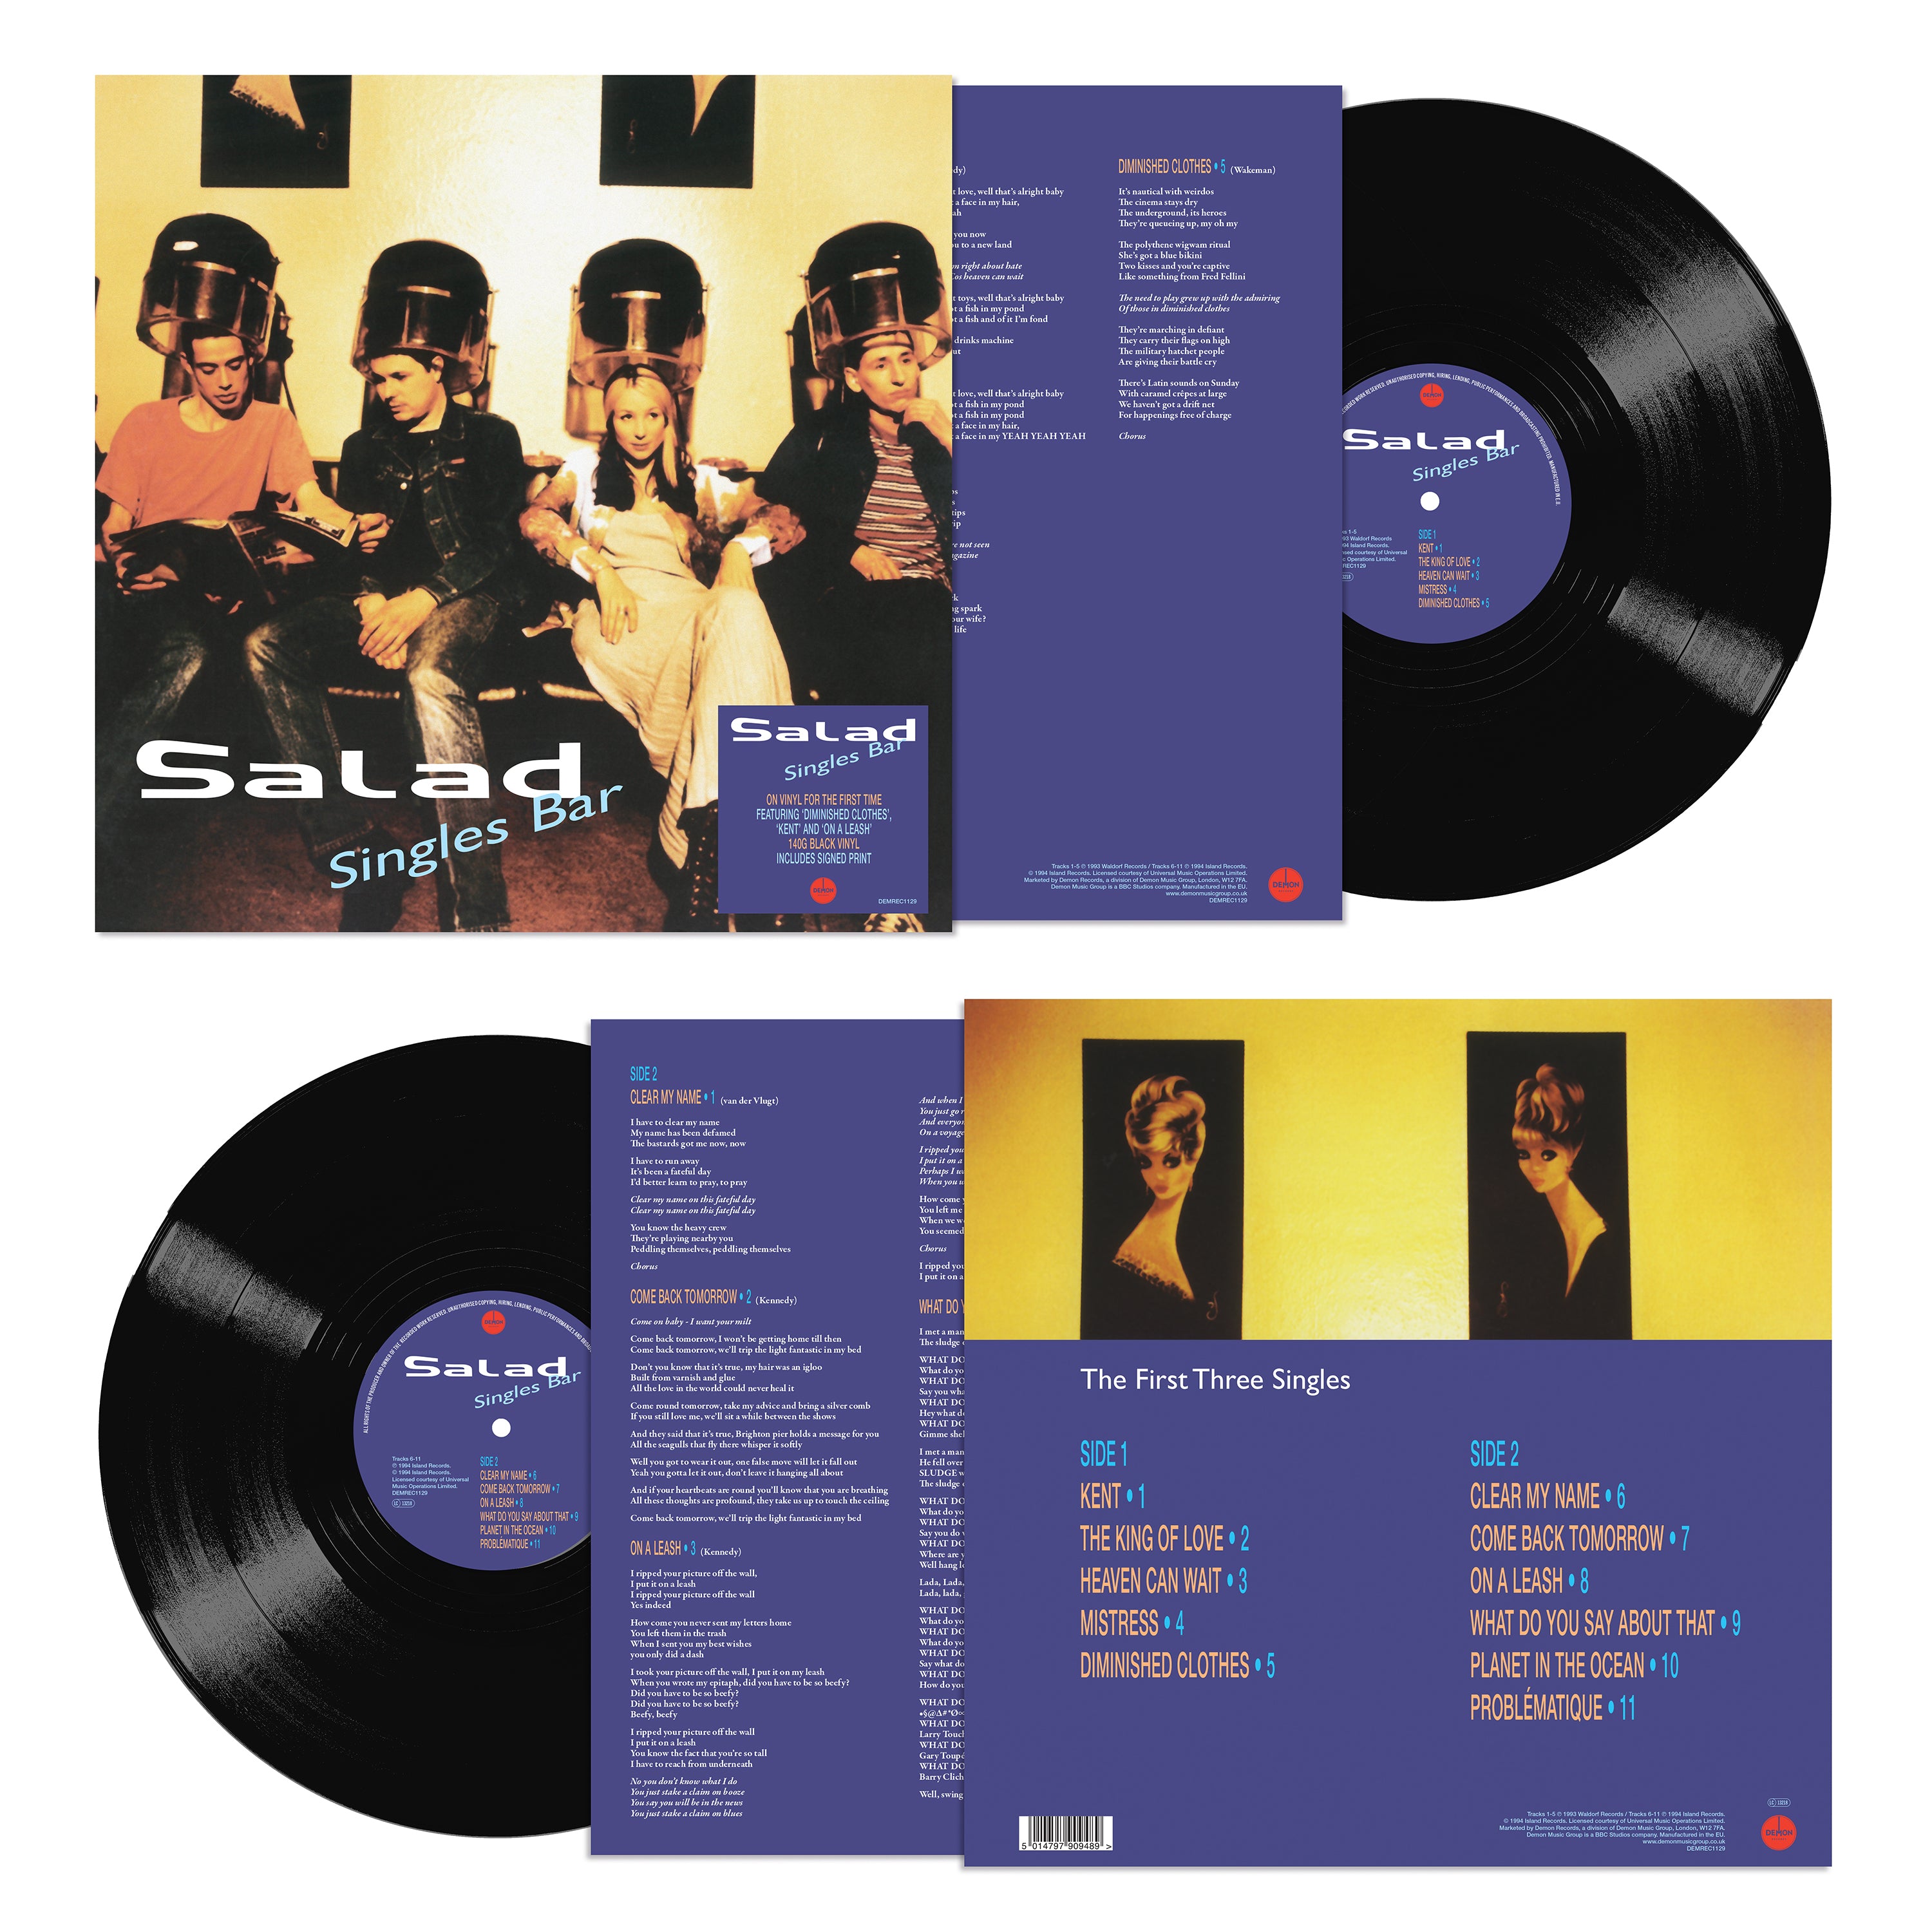 Salad - Singles Bar: Limited Vinyl LP + Signed Print